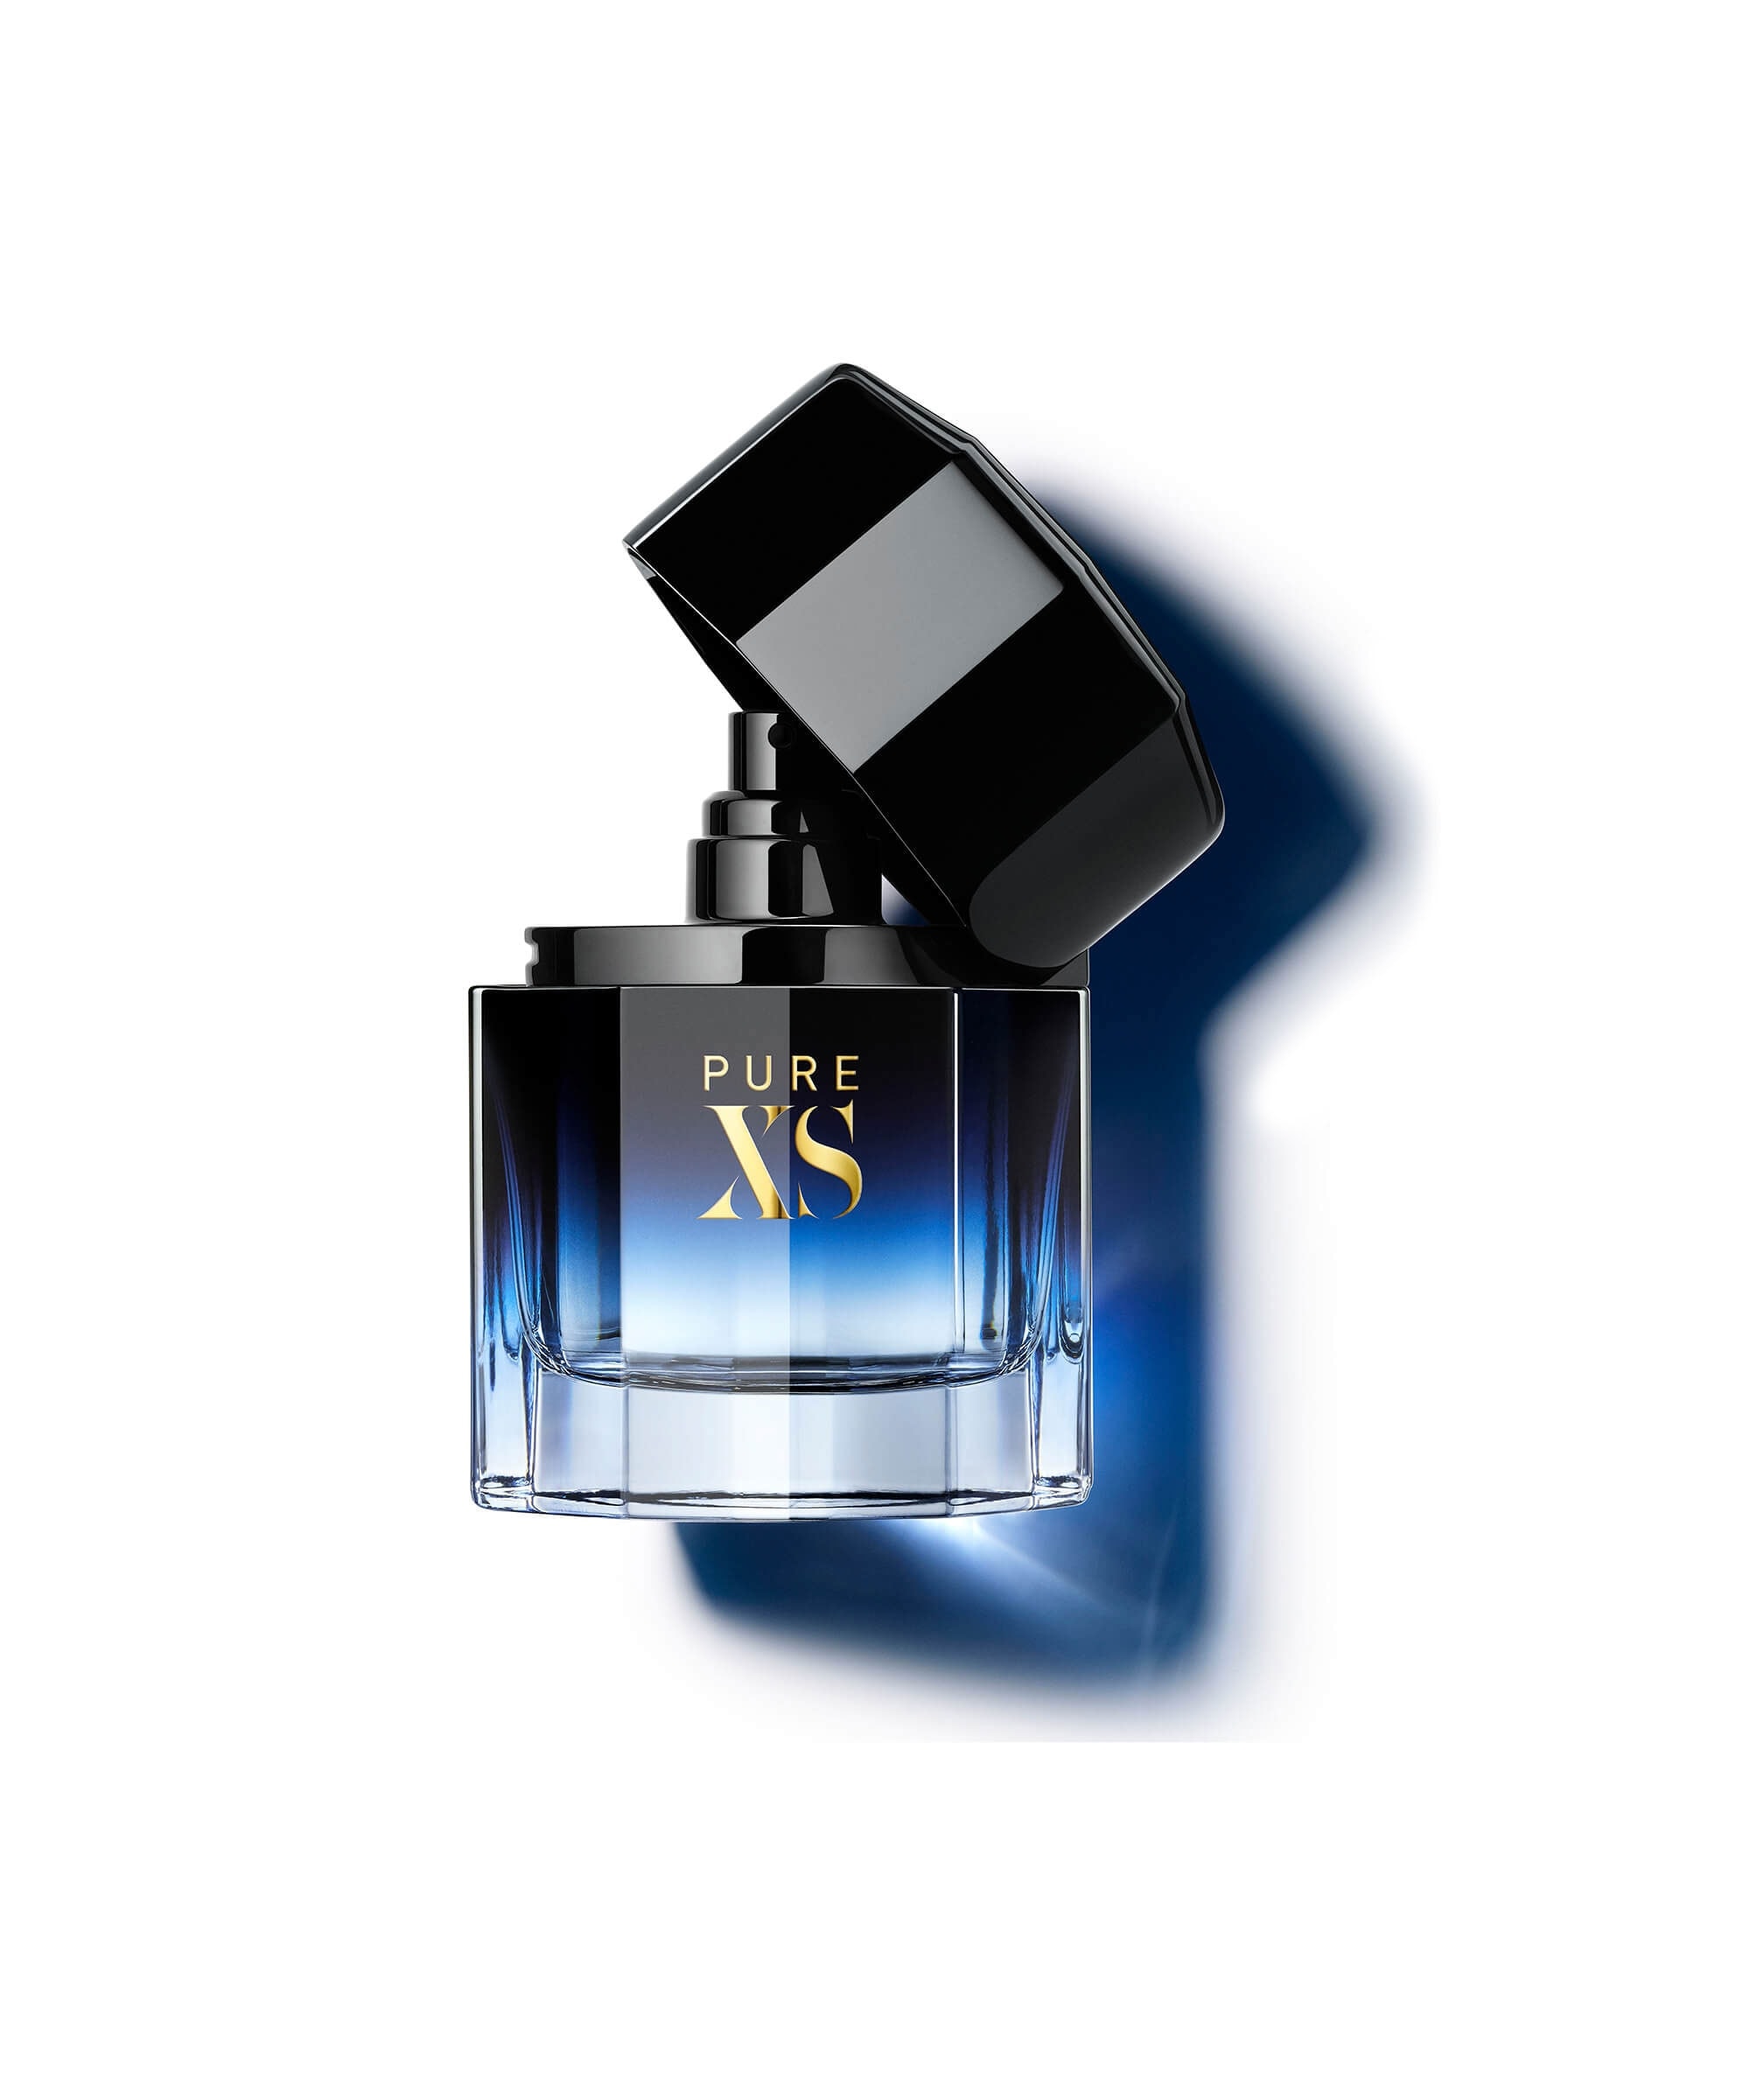 Perfuma.lk - Perfume and Cologne|Buy Fragrances Online|Shampoo